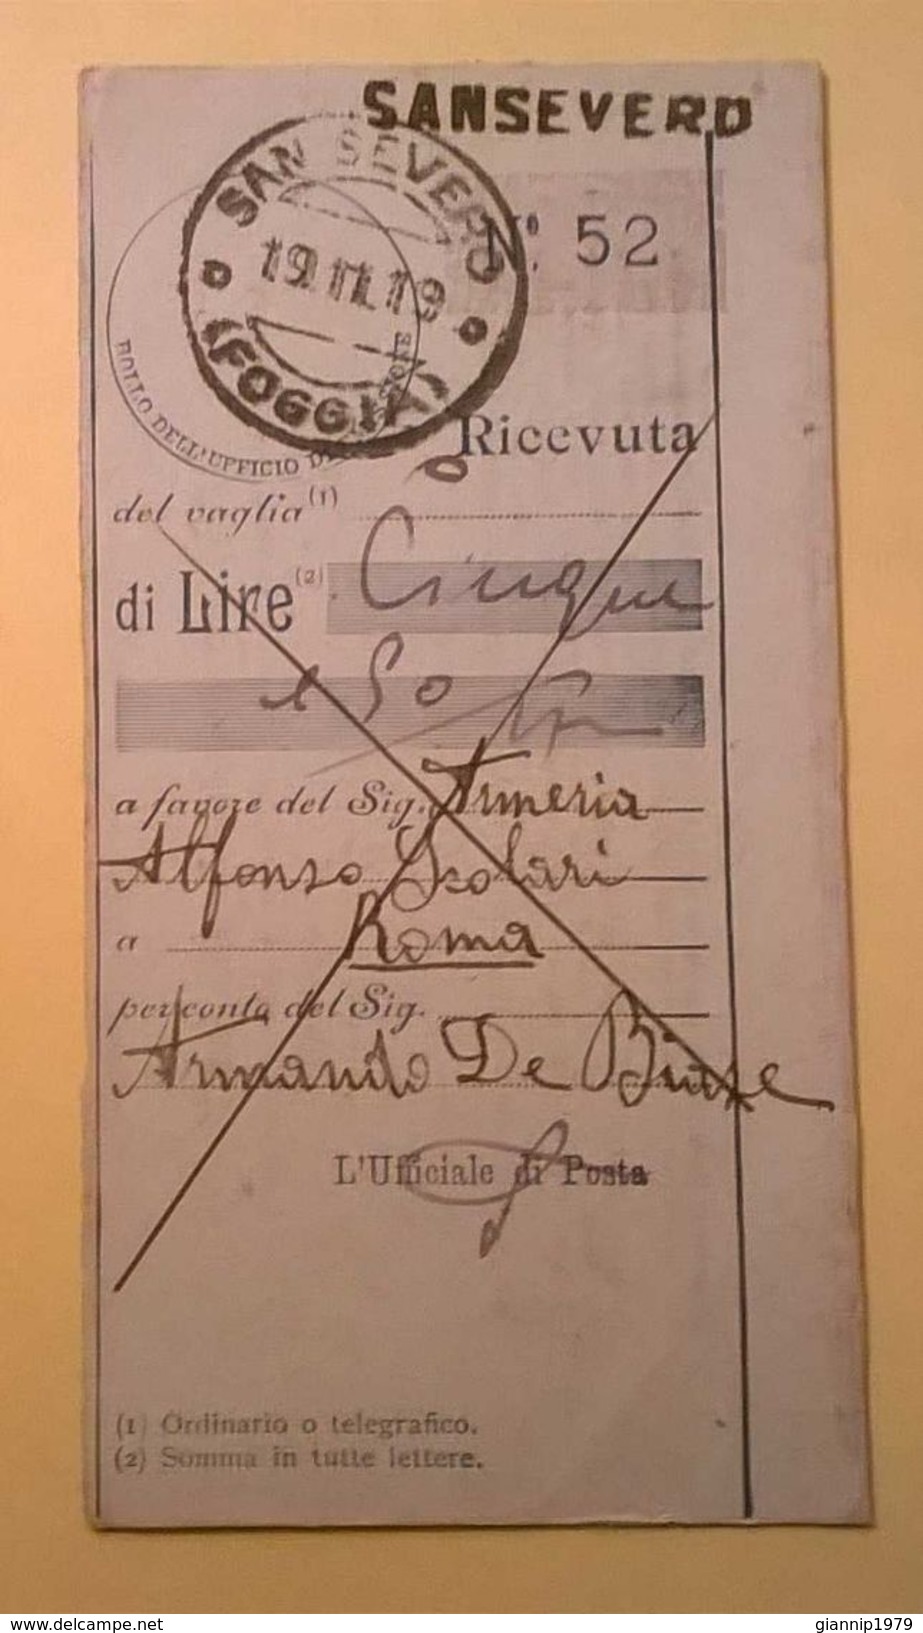 VAGLIA POSTALE RICEVUTA SAN SEVERO FOGGIA 1919 - Tax On Money Orders